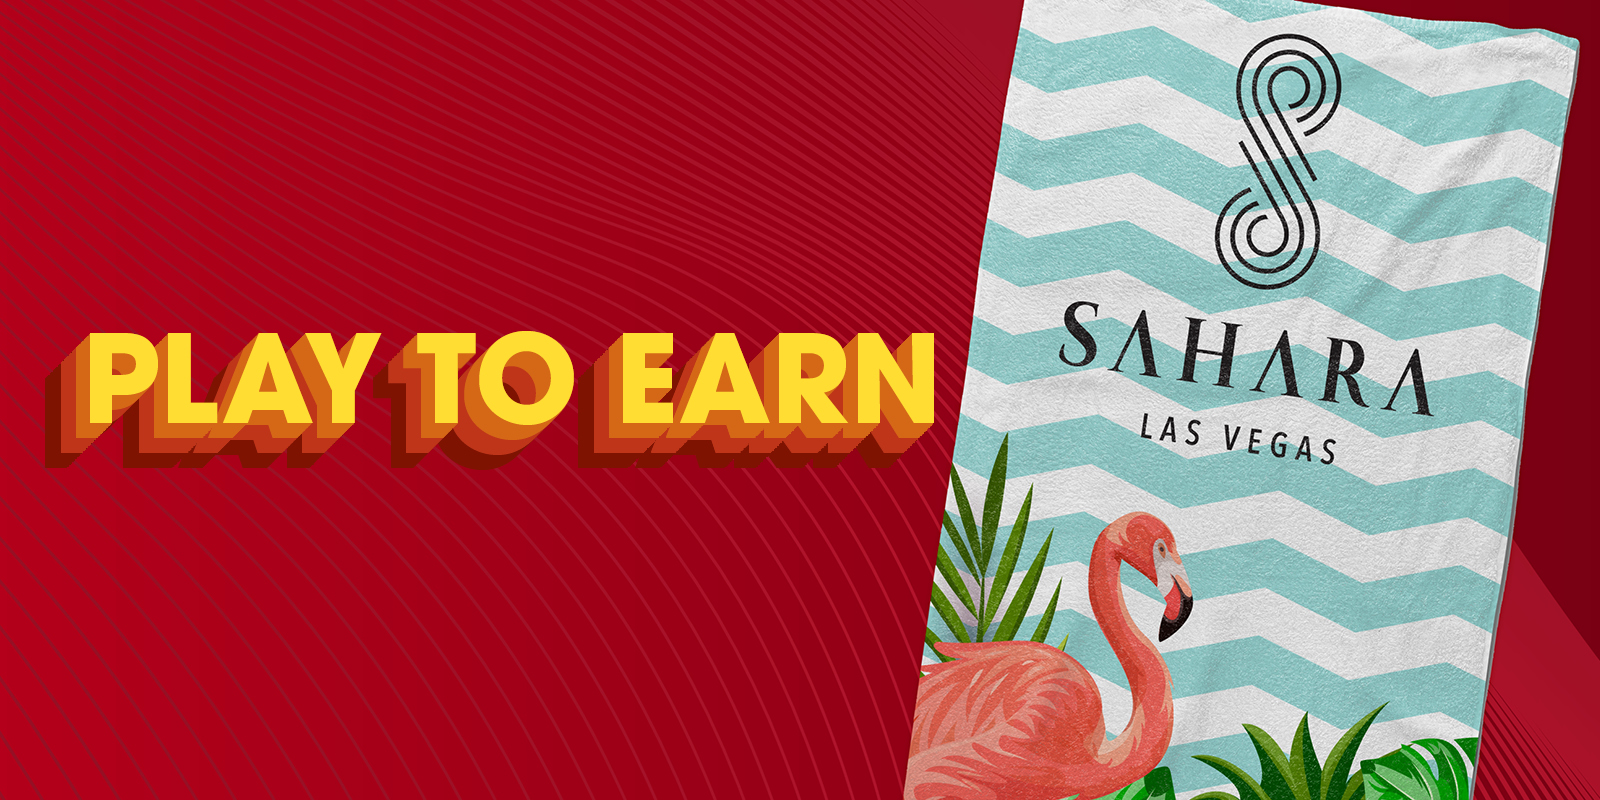 A creative for Play to earn a SAHARA towel showing a flamingo beach towel